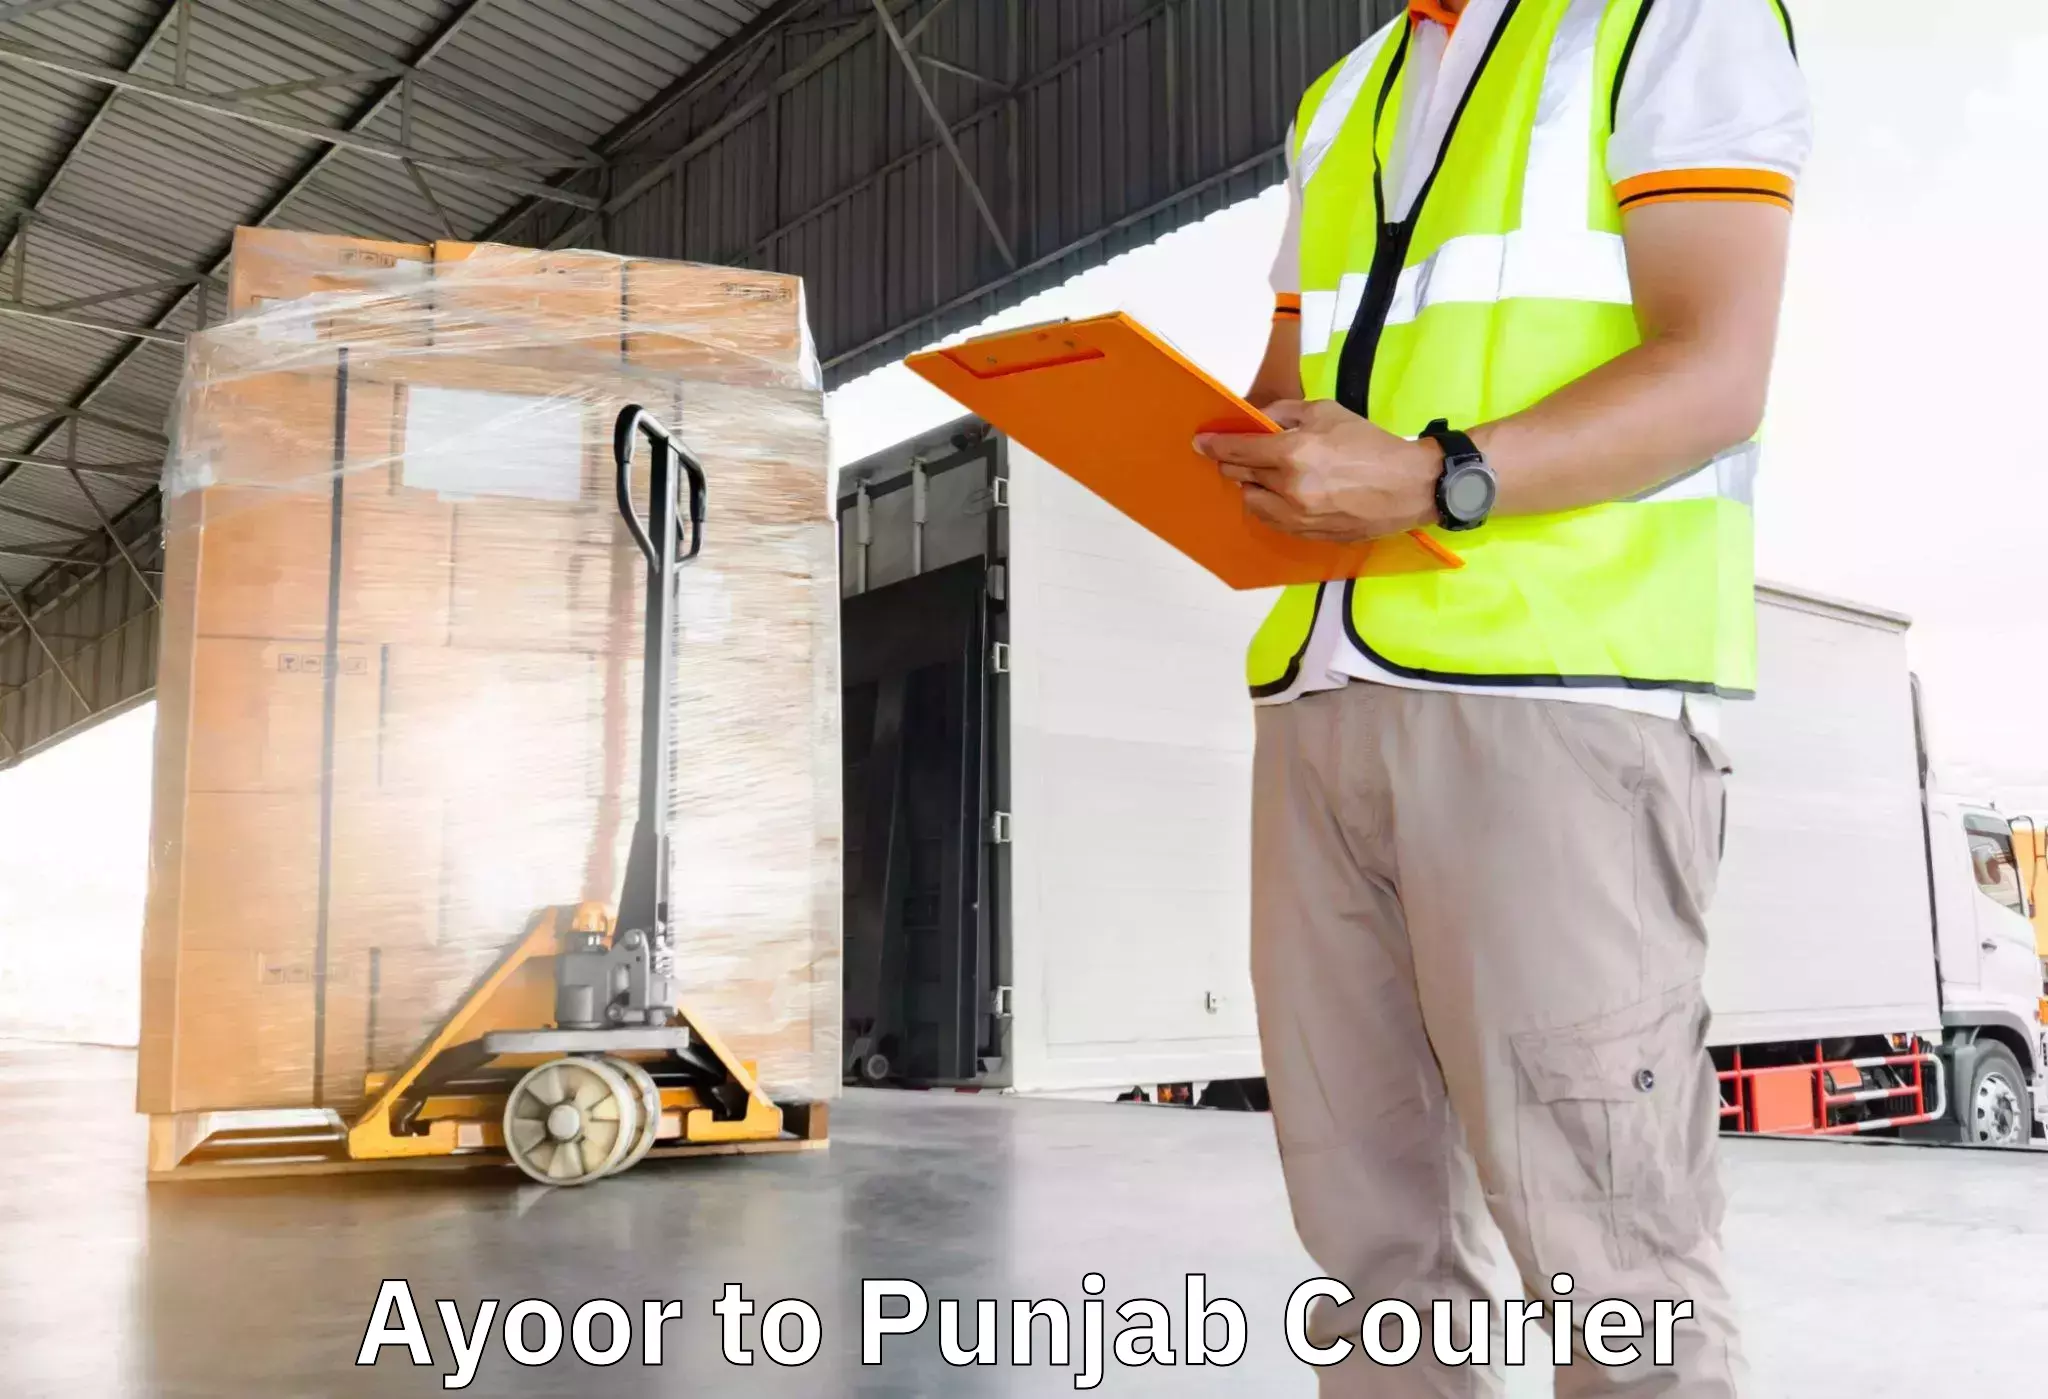 Skilled furniture movers Ayoor to Punjab